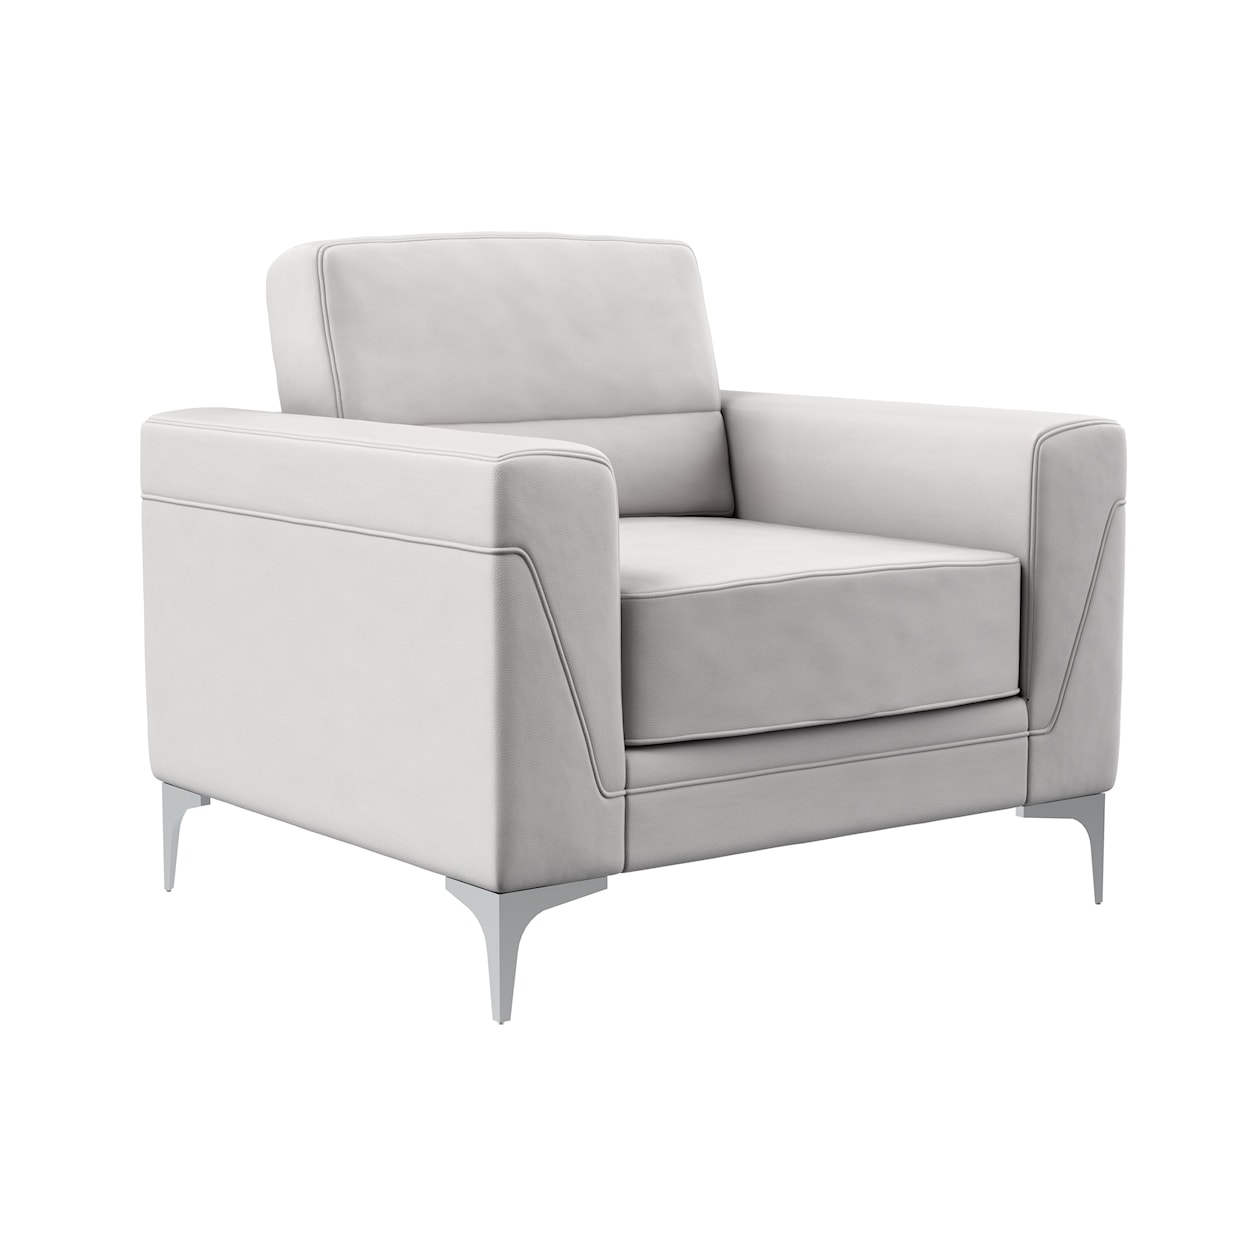 Global Furniture U6109 Light Grey Chair PVC